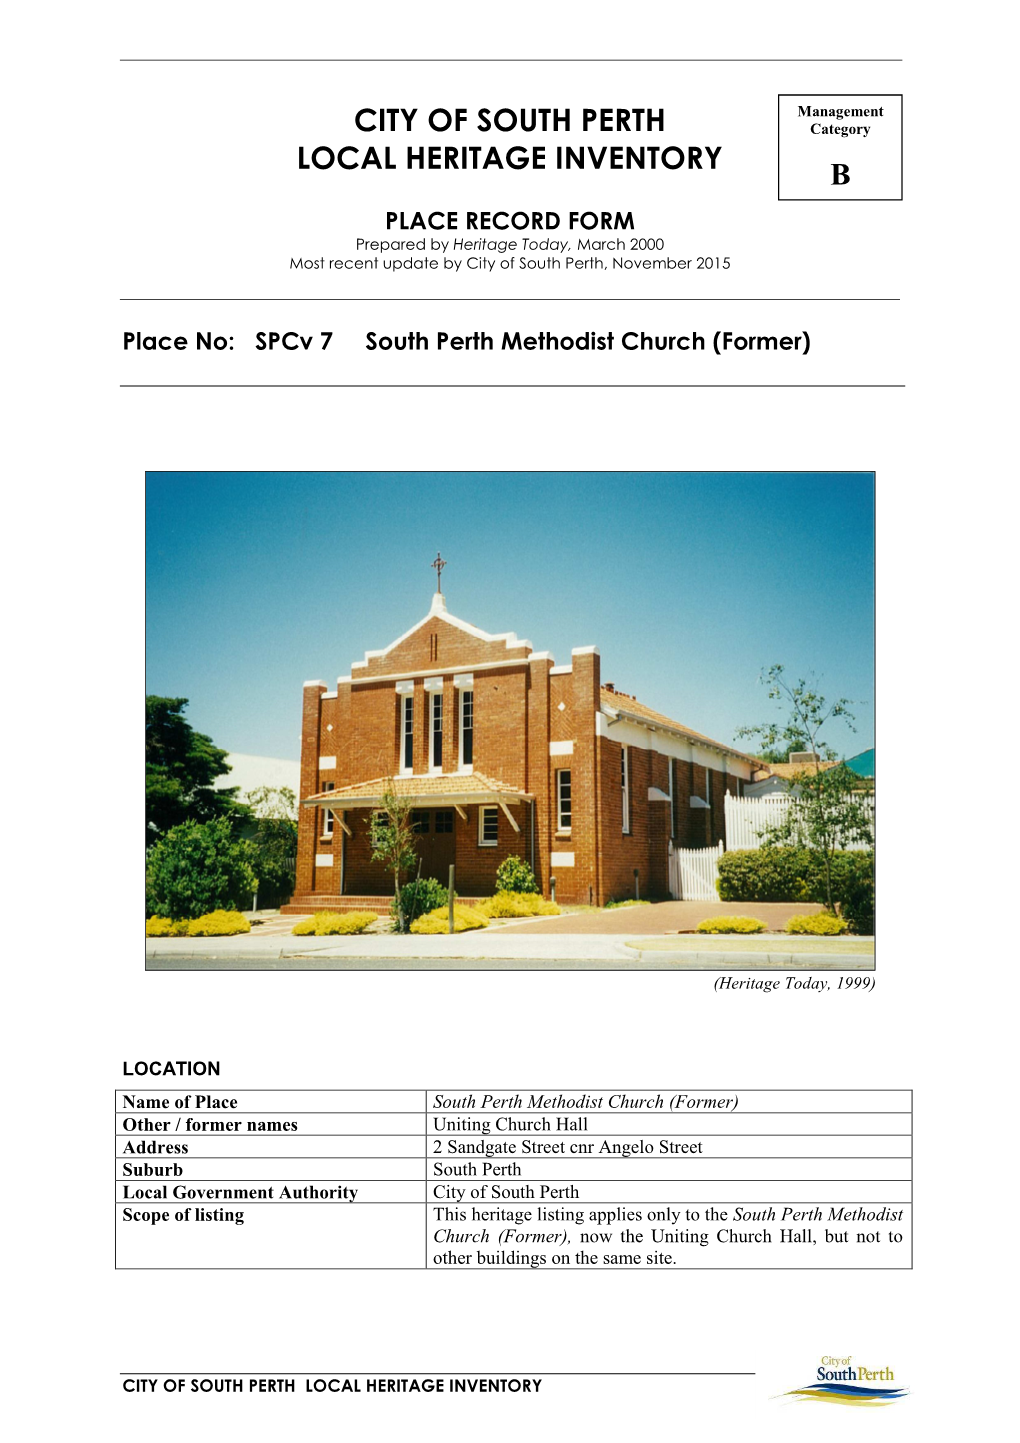 Spcv 7 South Perth Methodist Church (Former) (Cat B)